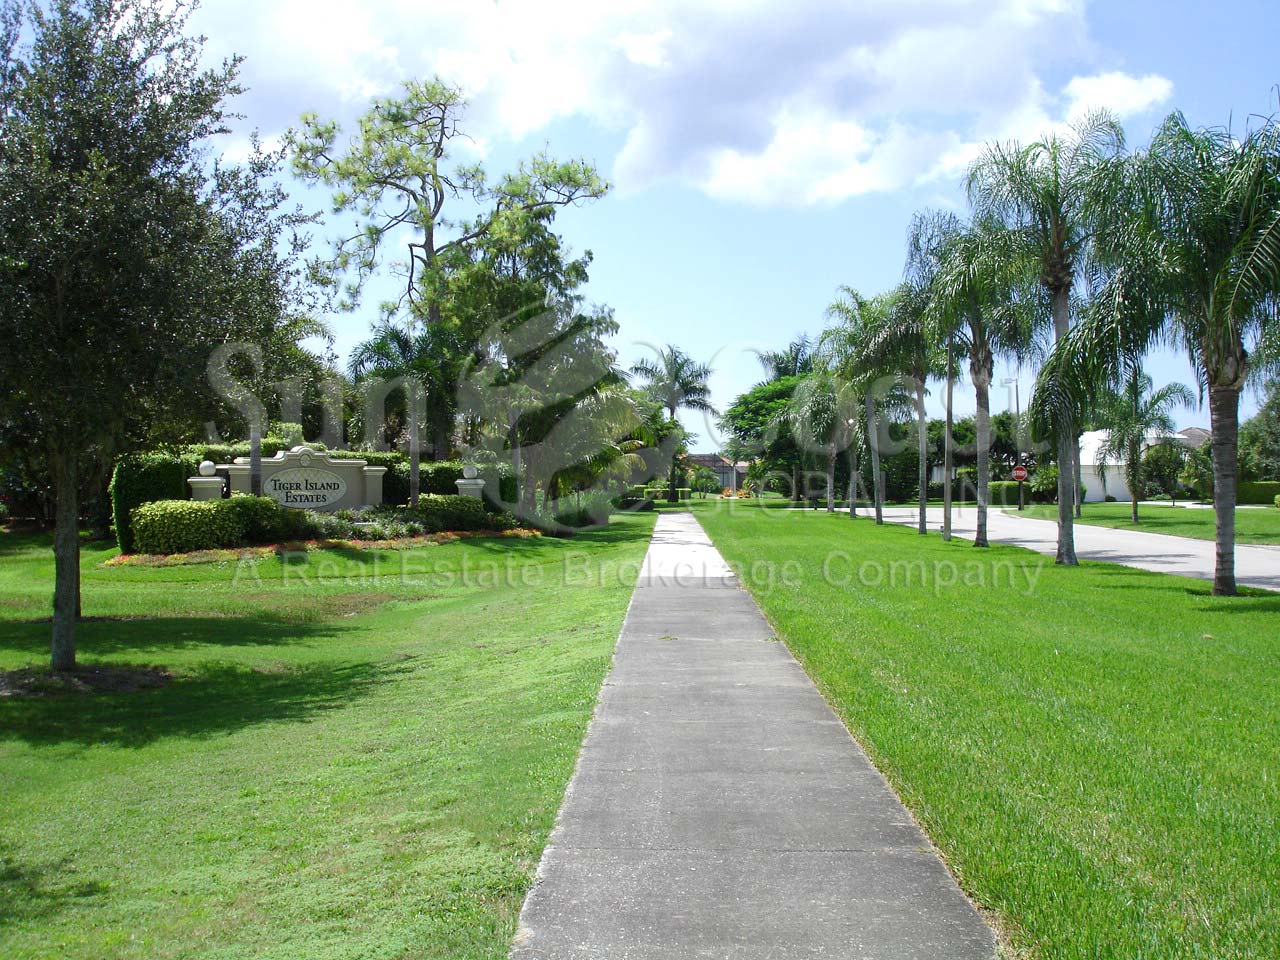 Tiger Island Estates Entrance